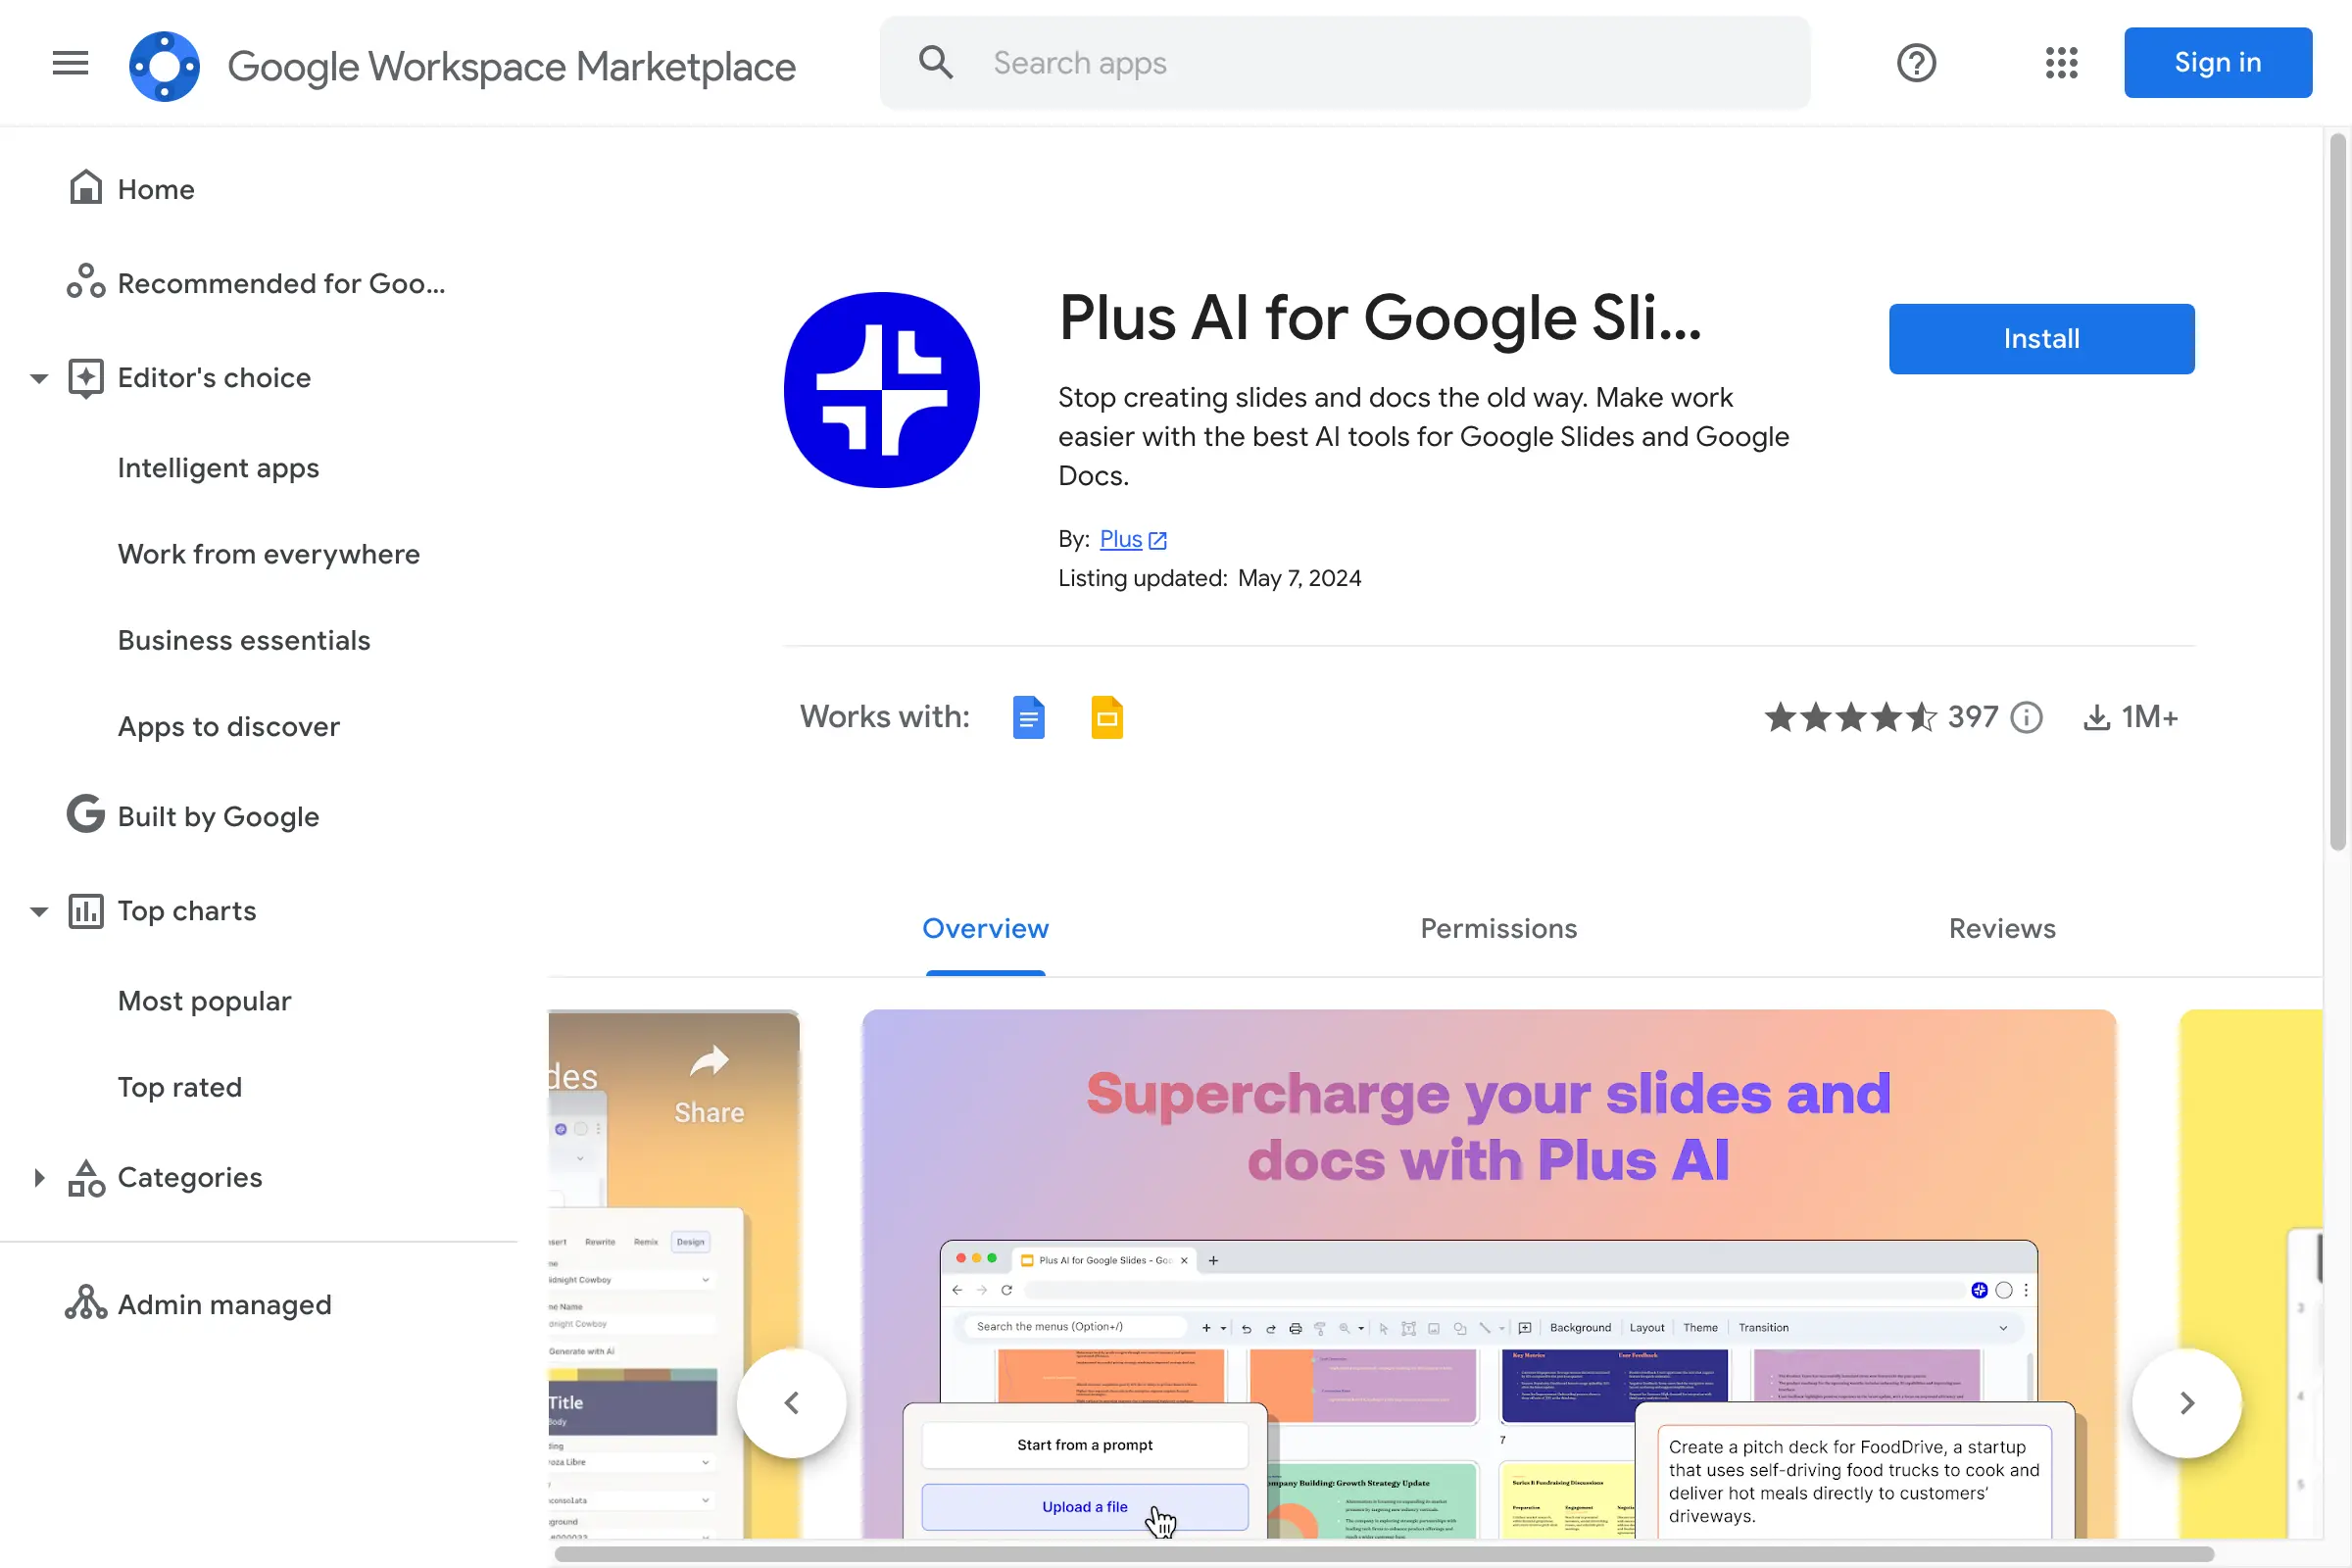 Plus AI for Google Slides™ and Docs™